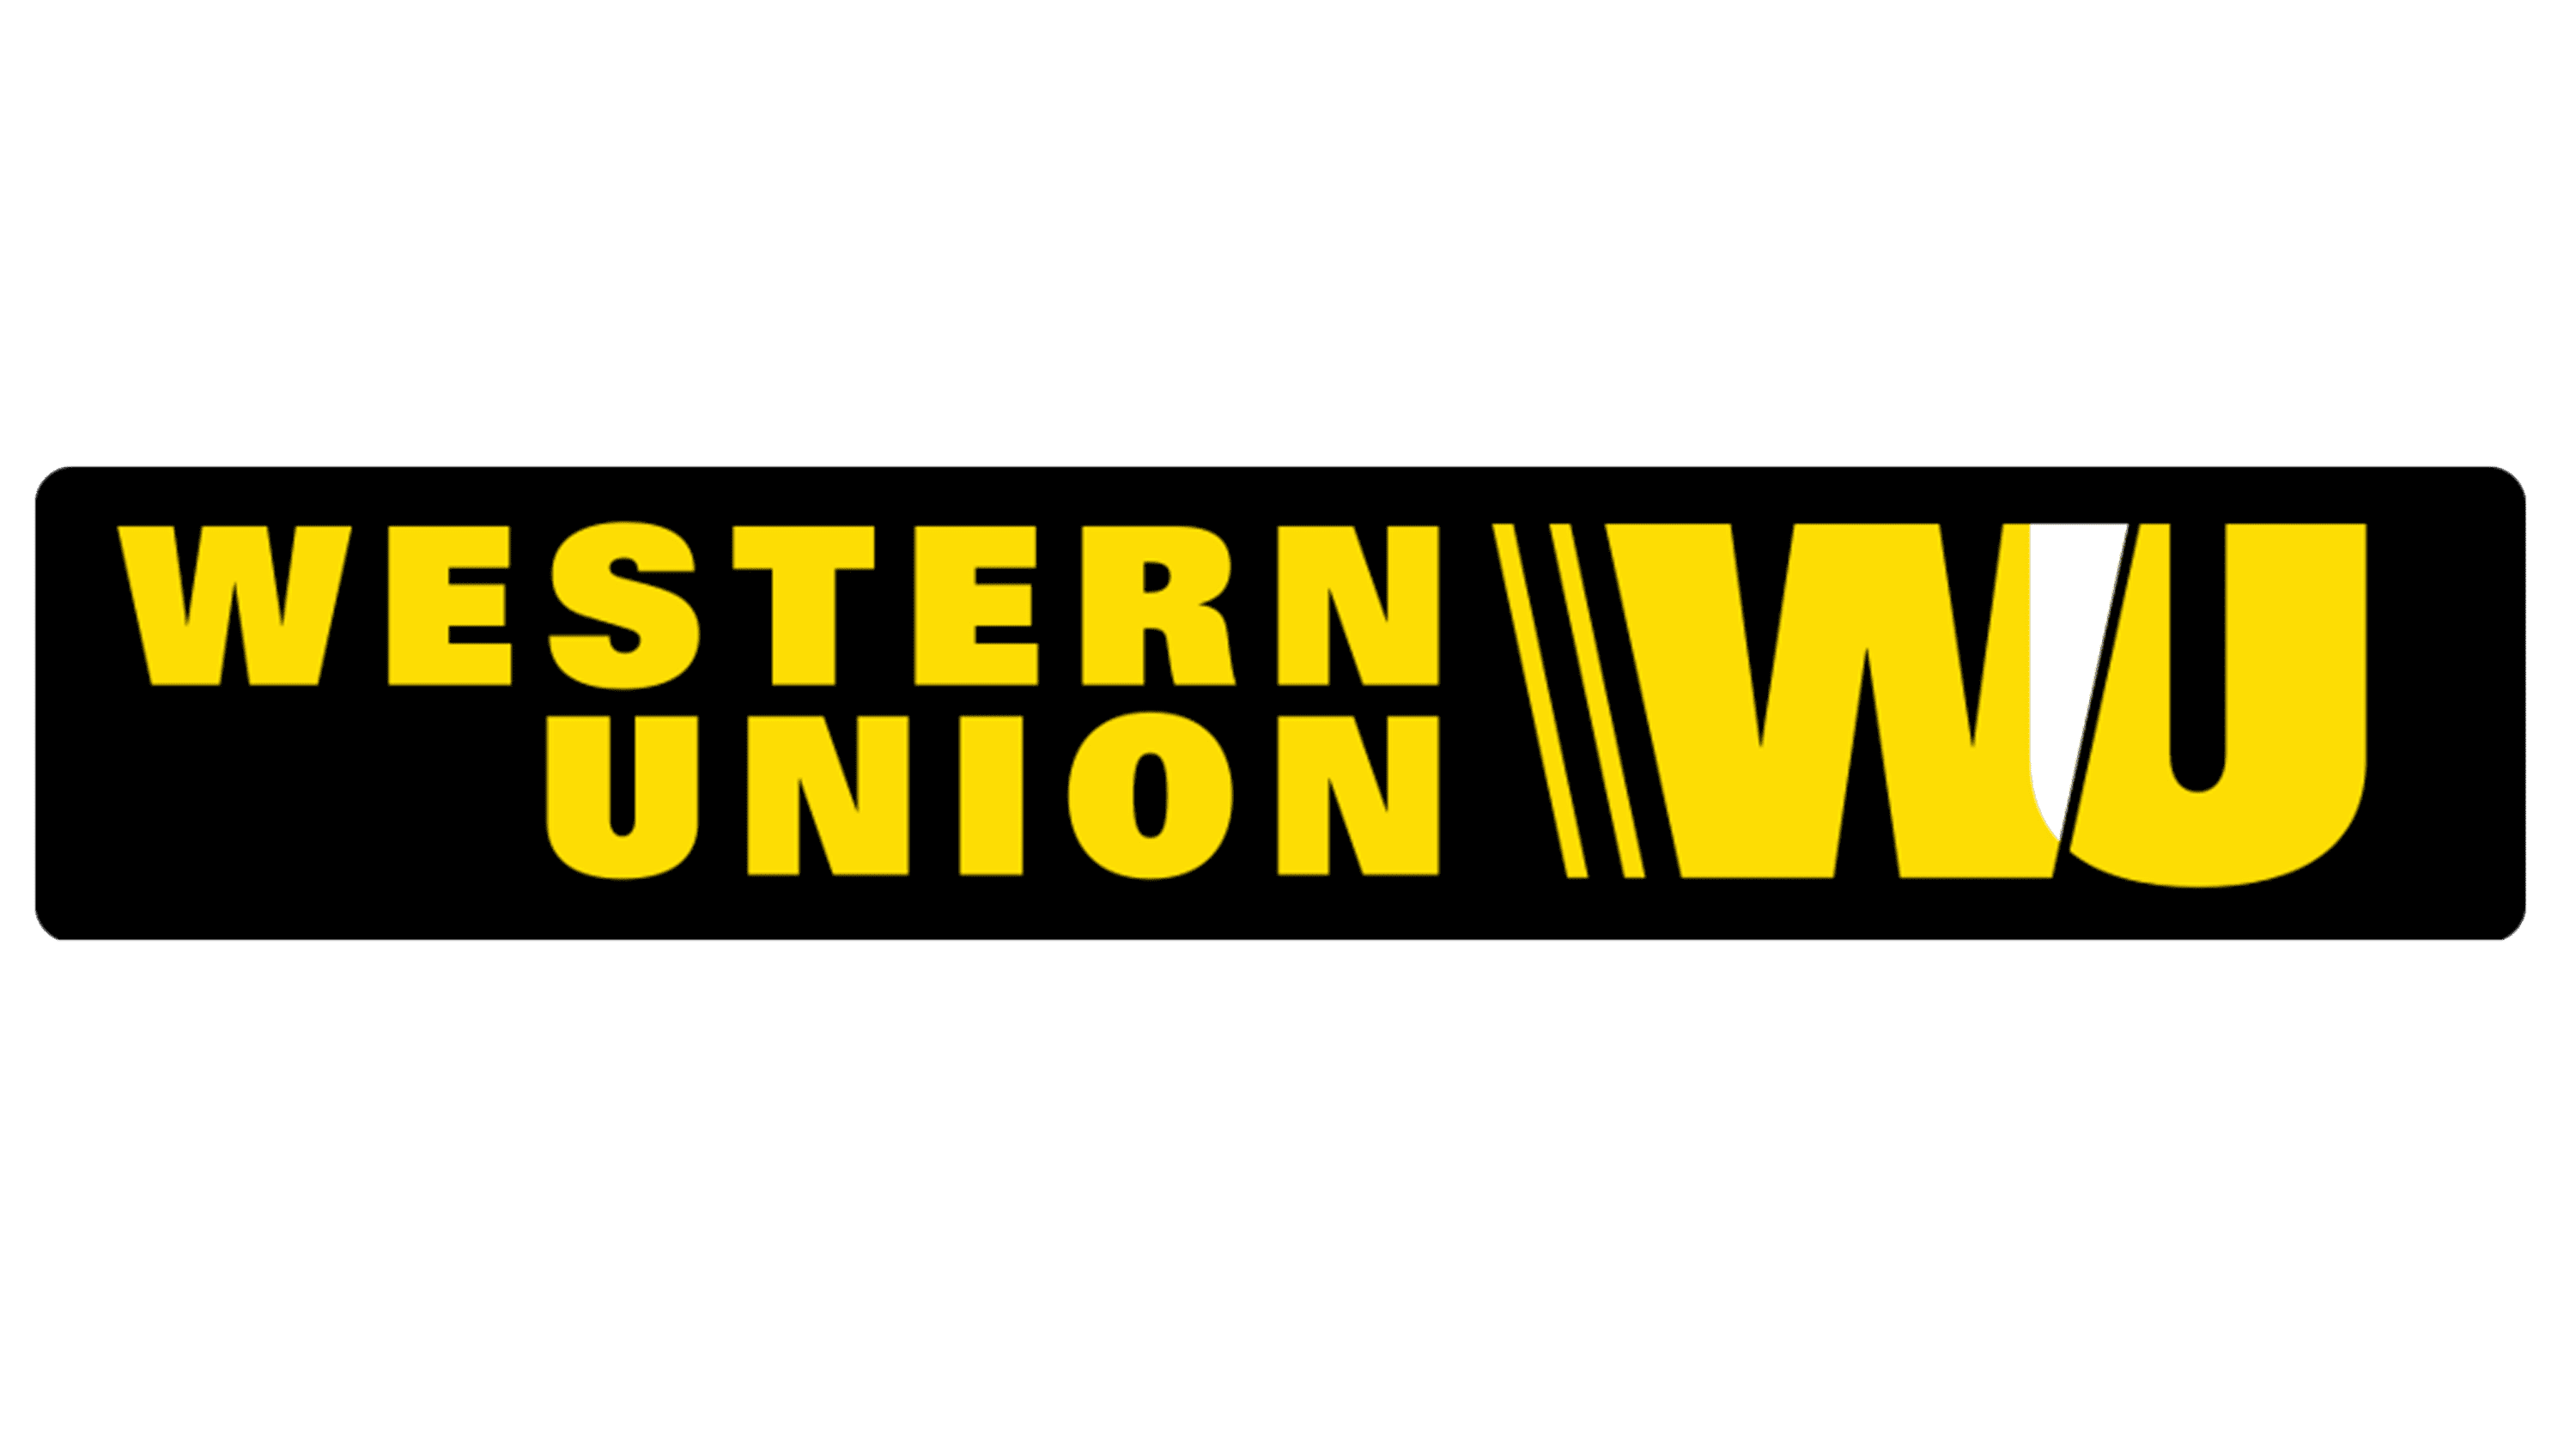 Furth, Germany : Logo of Western Union. The Western Union Company